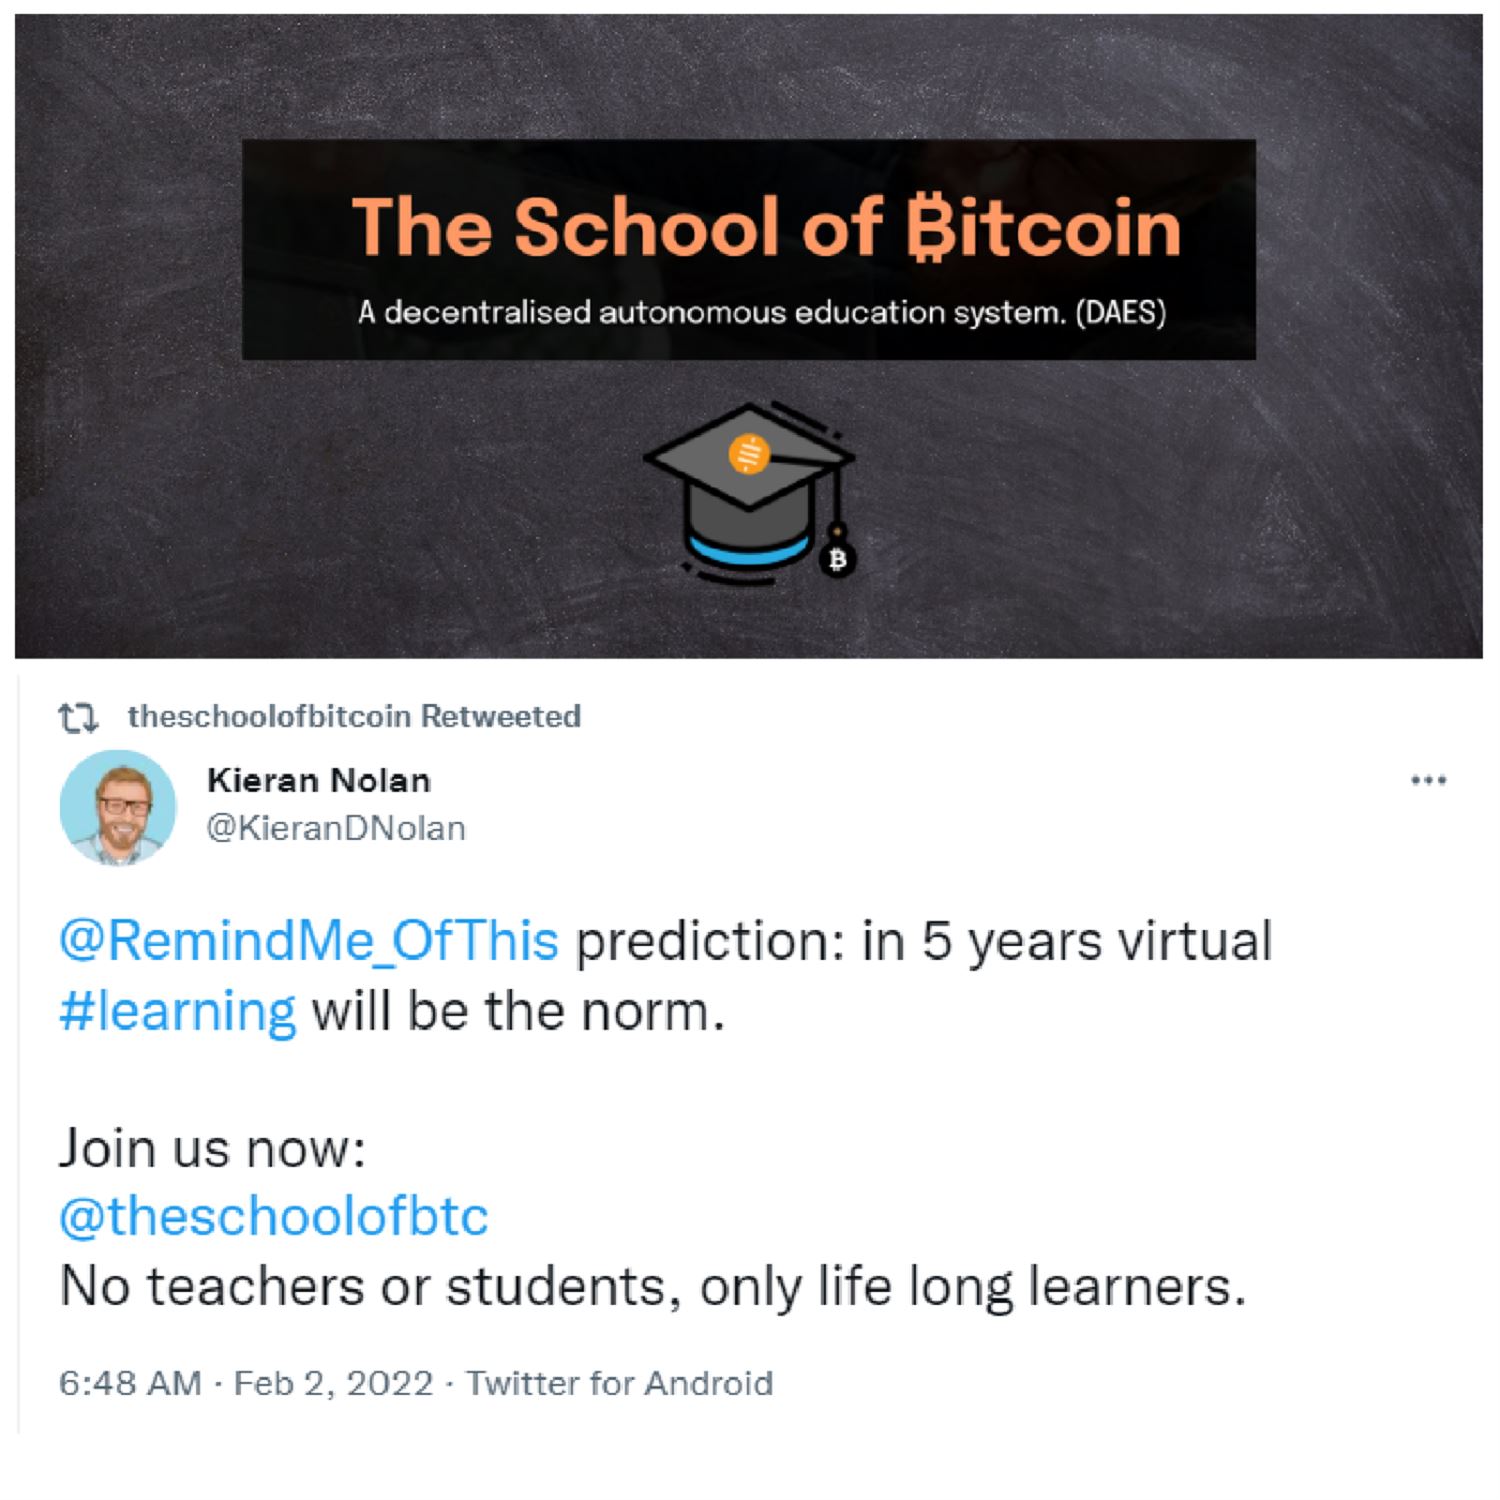 The School of Bitcoin